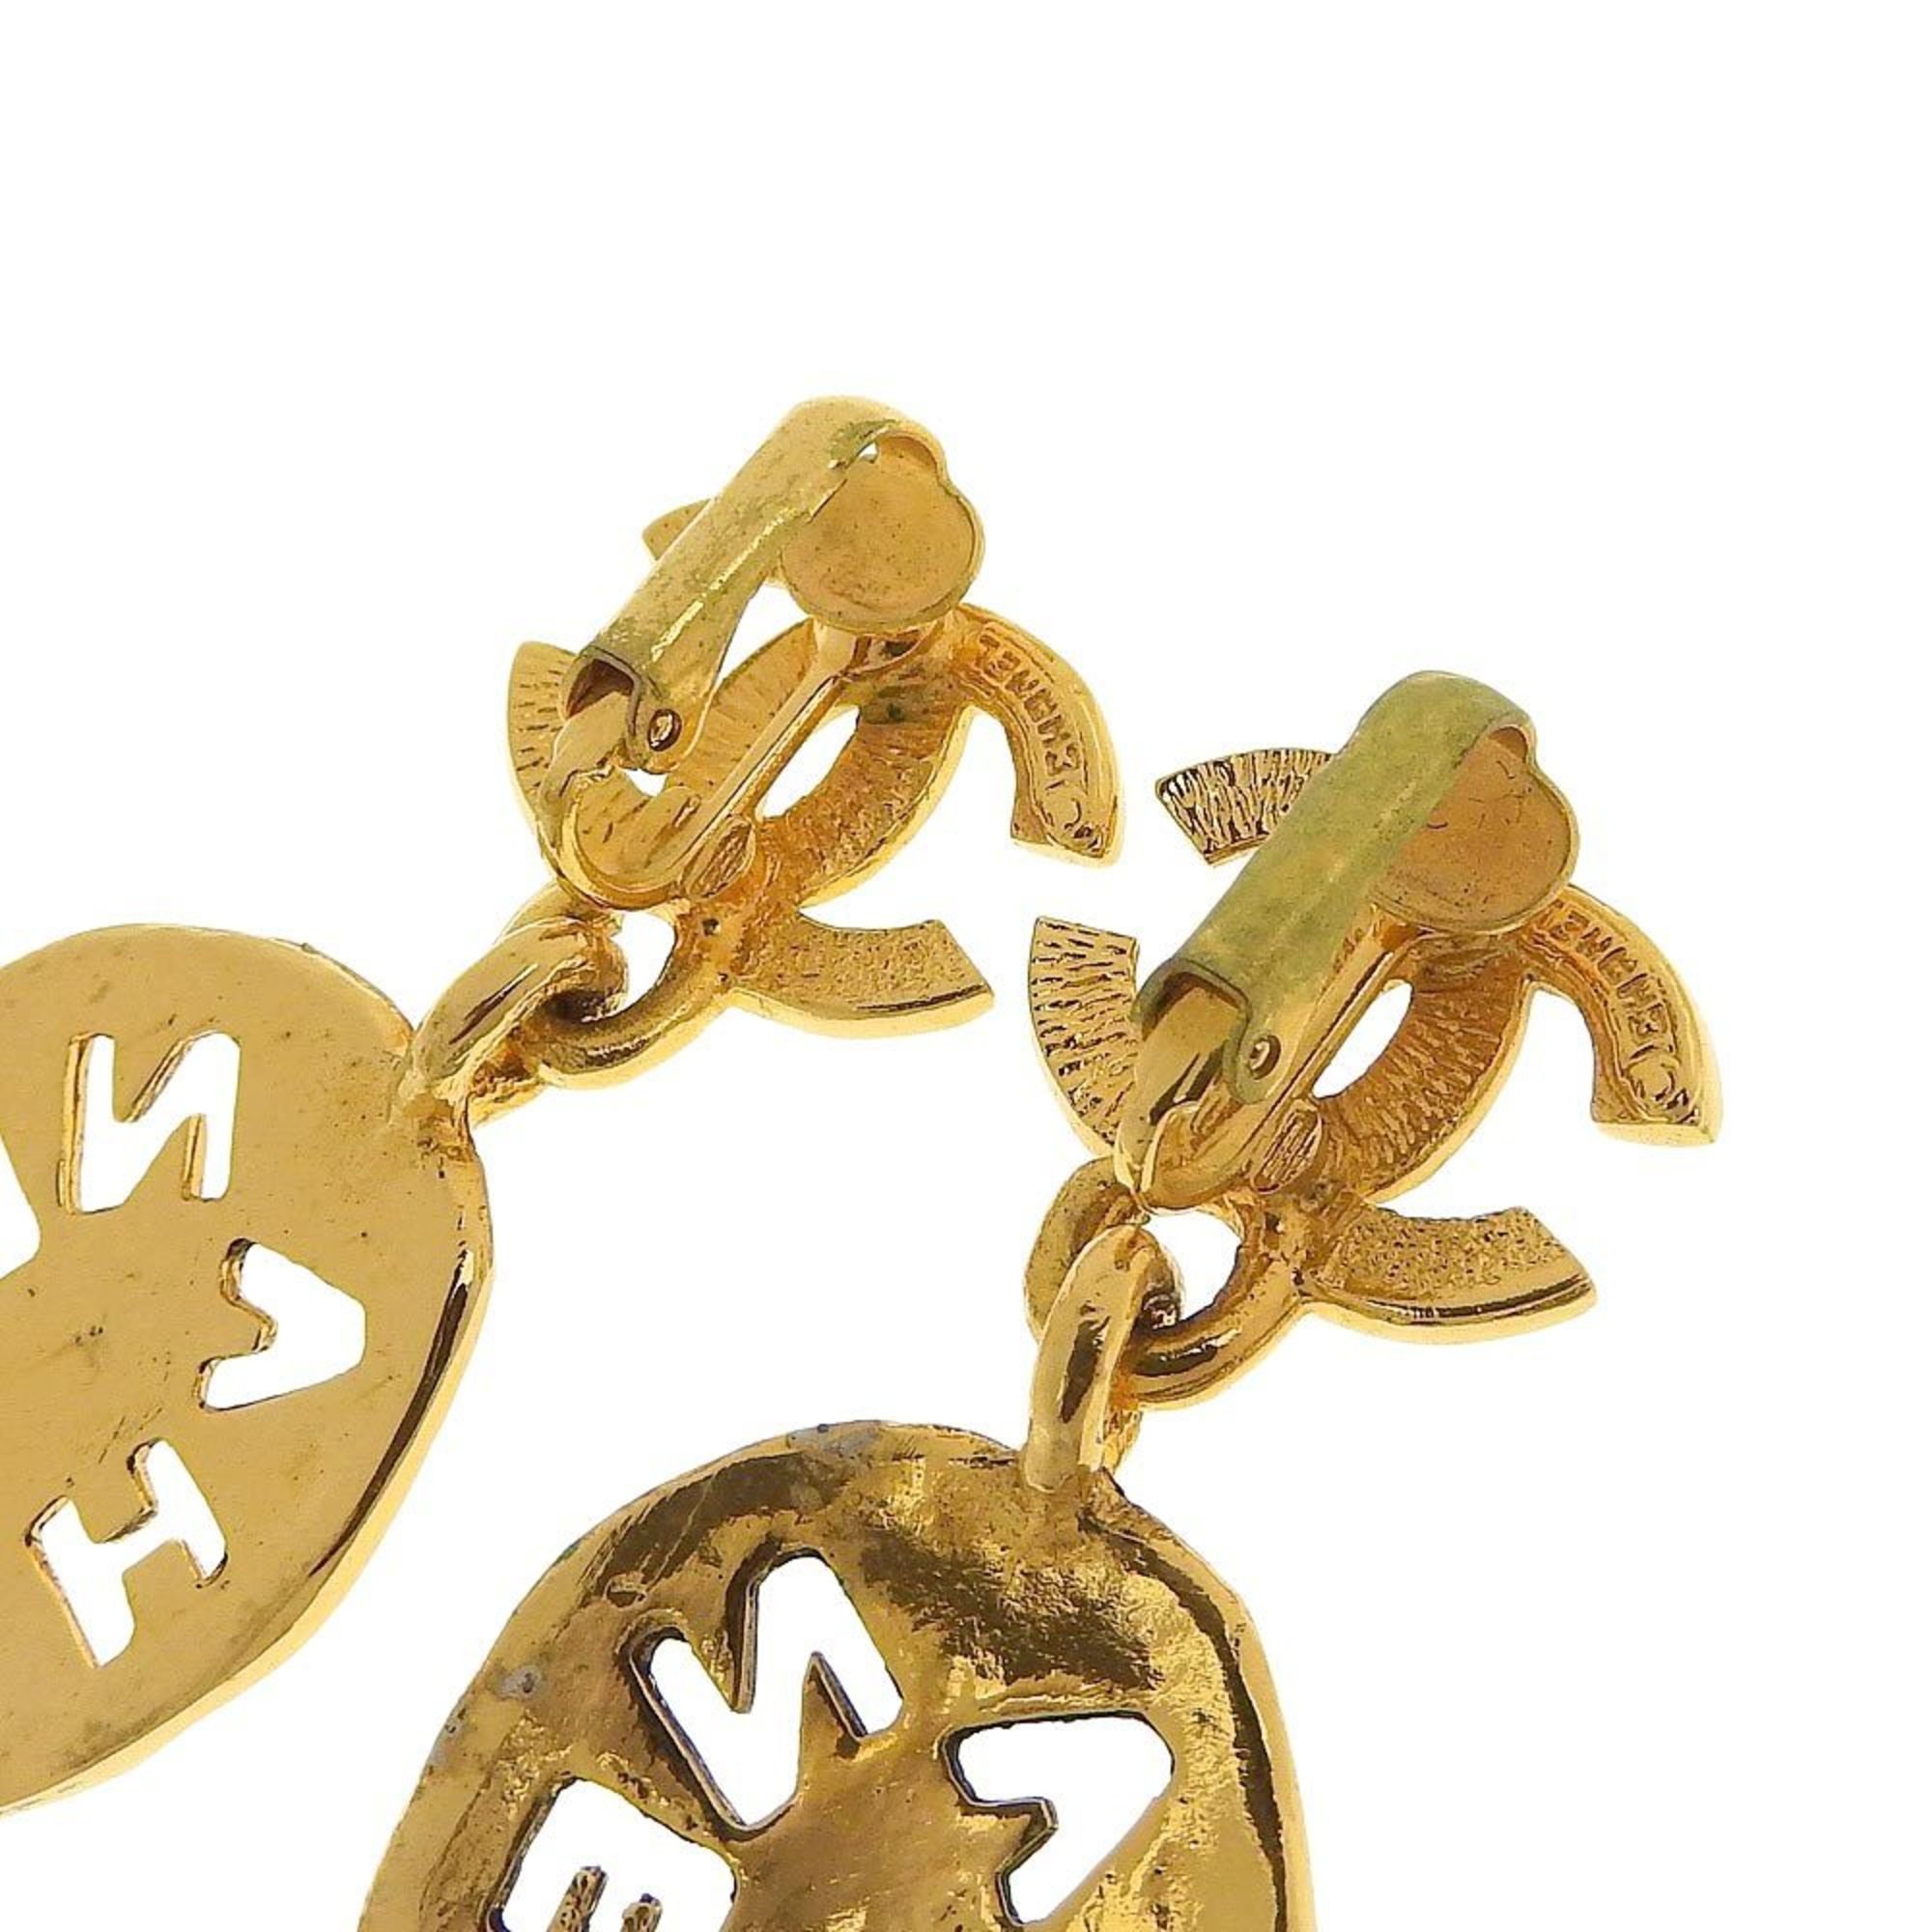 Chanel CHANEL earrings here mark gold logo vintage